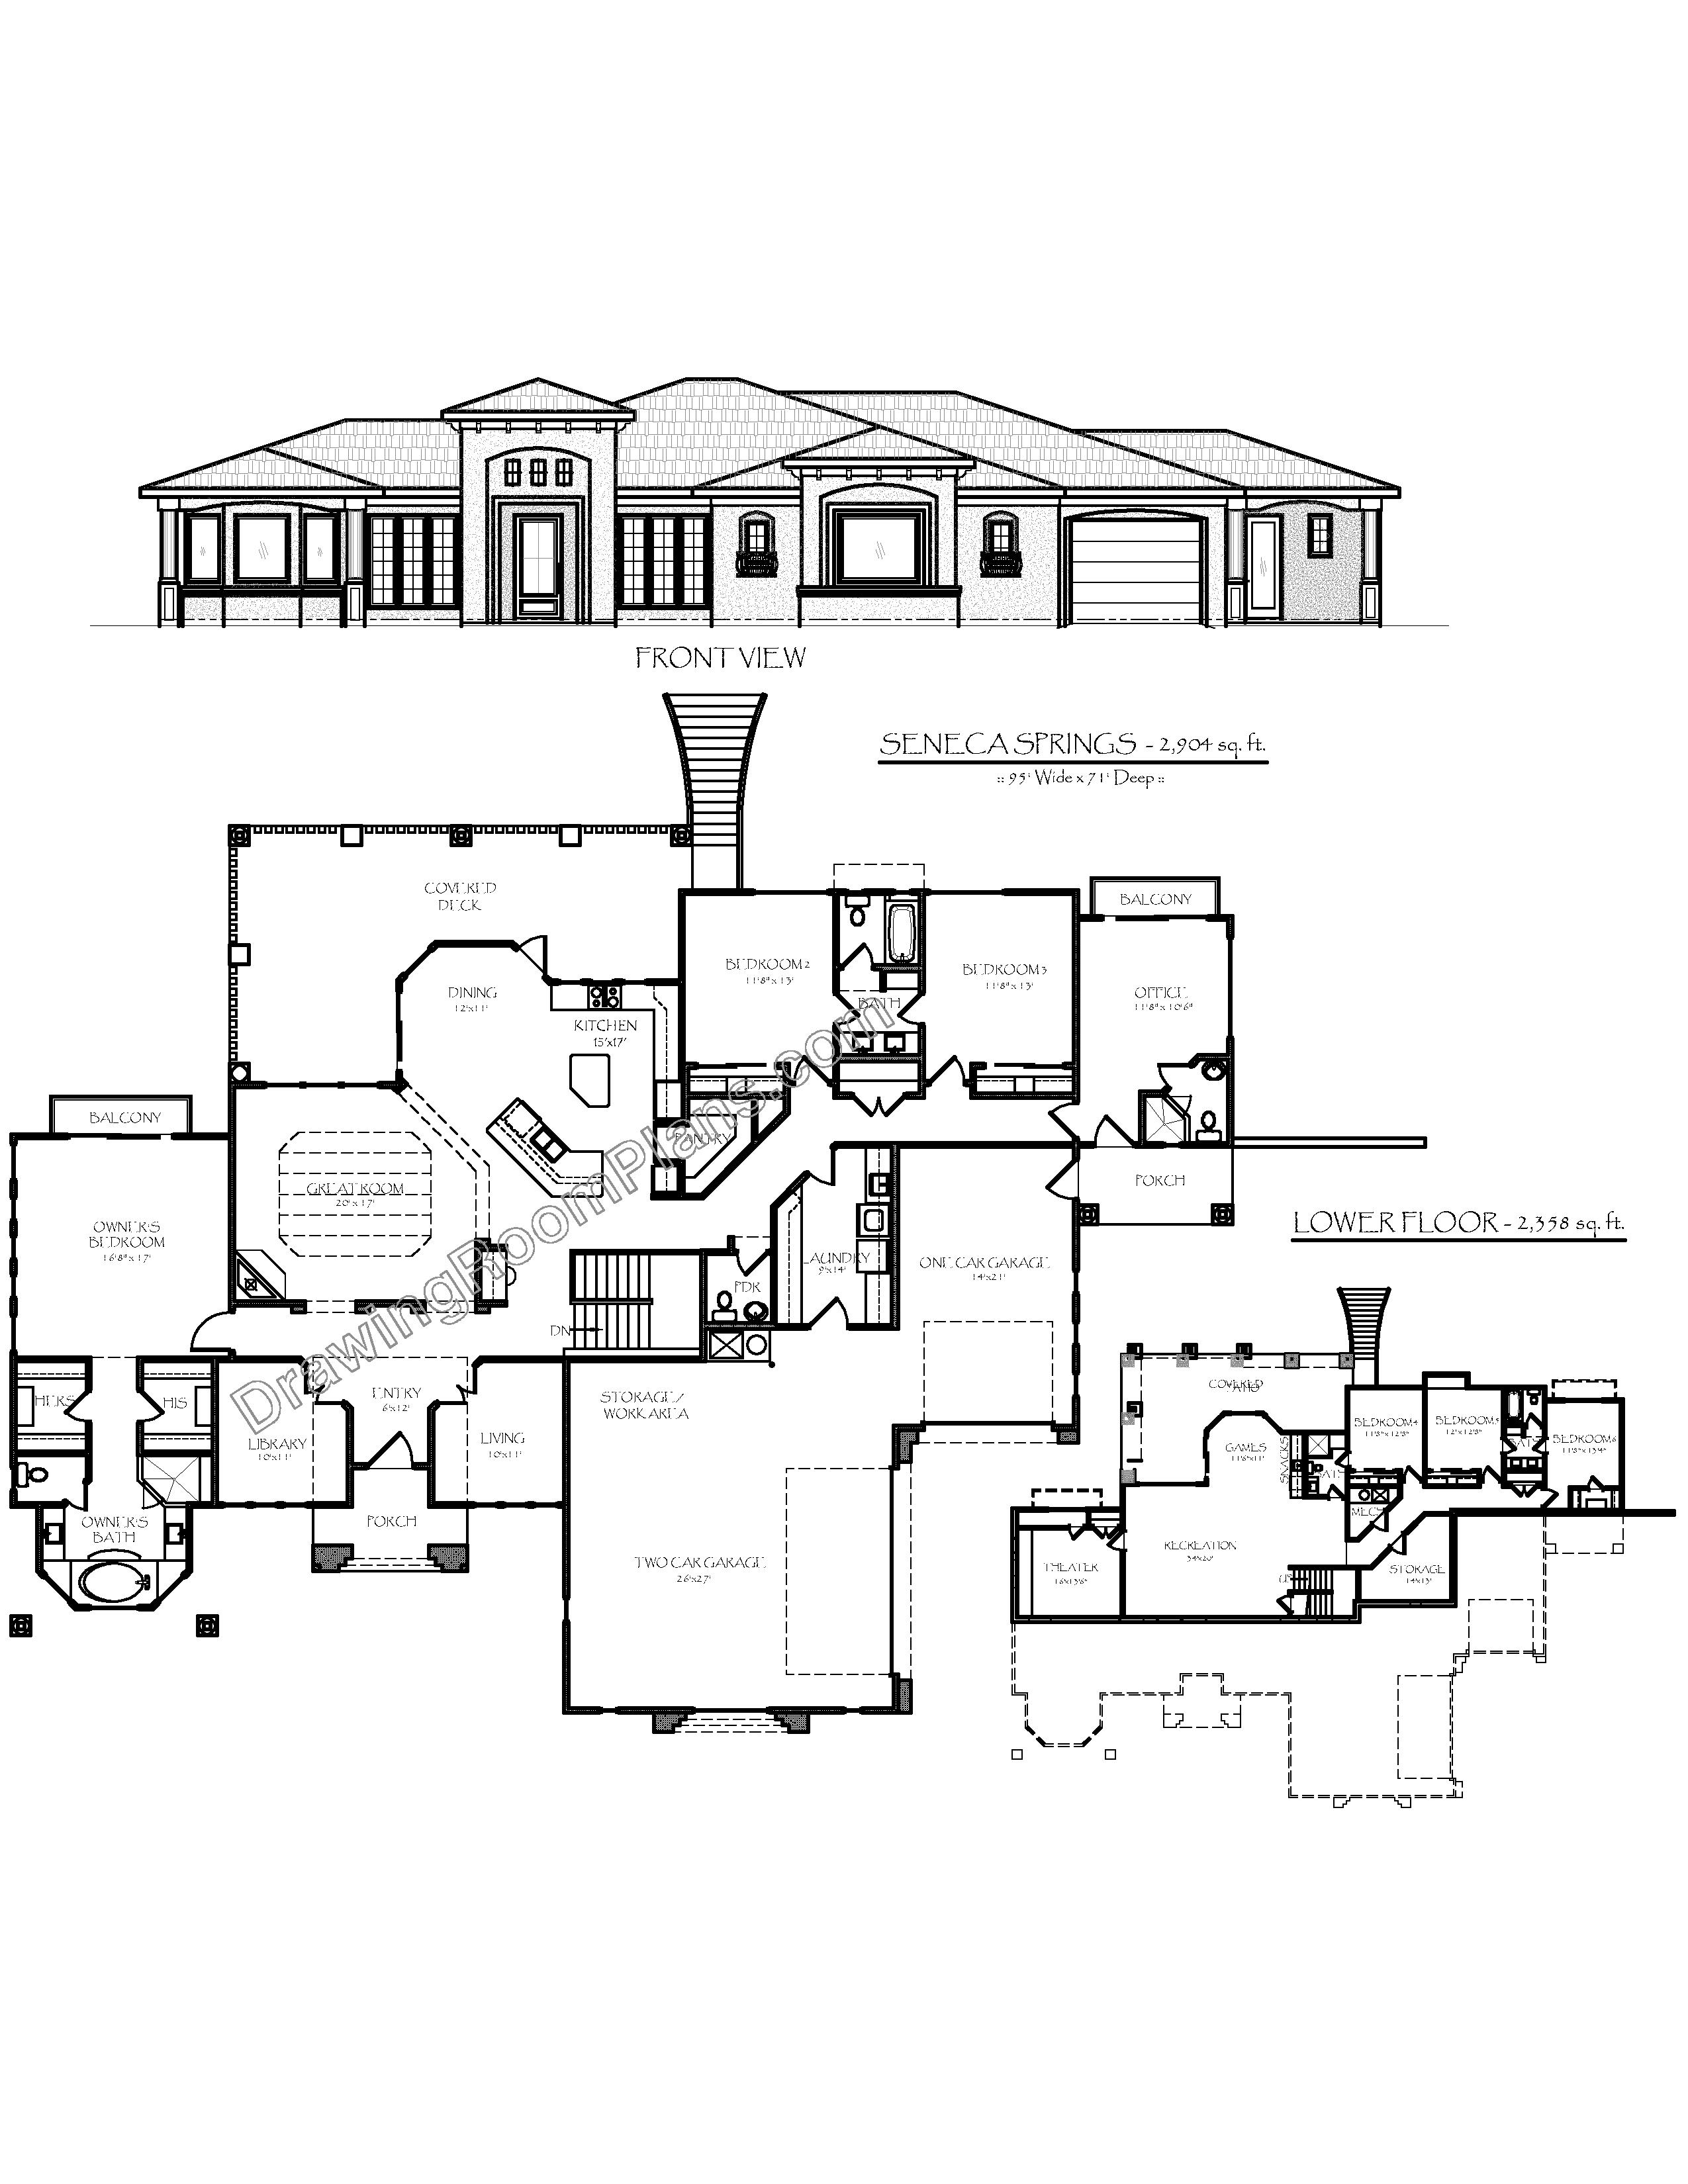 Seneca Springs - 5262 sq. ft. - 5001+ sq. ft. - Drawing Room Plans, LLC